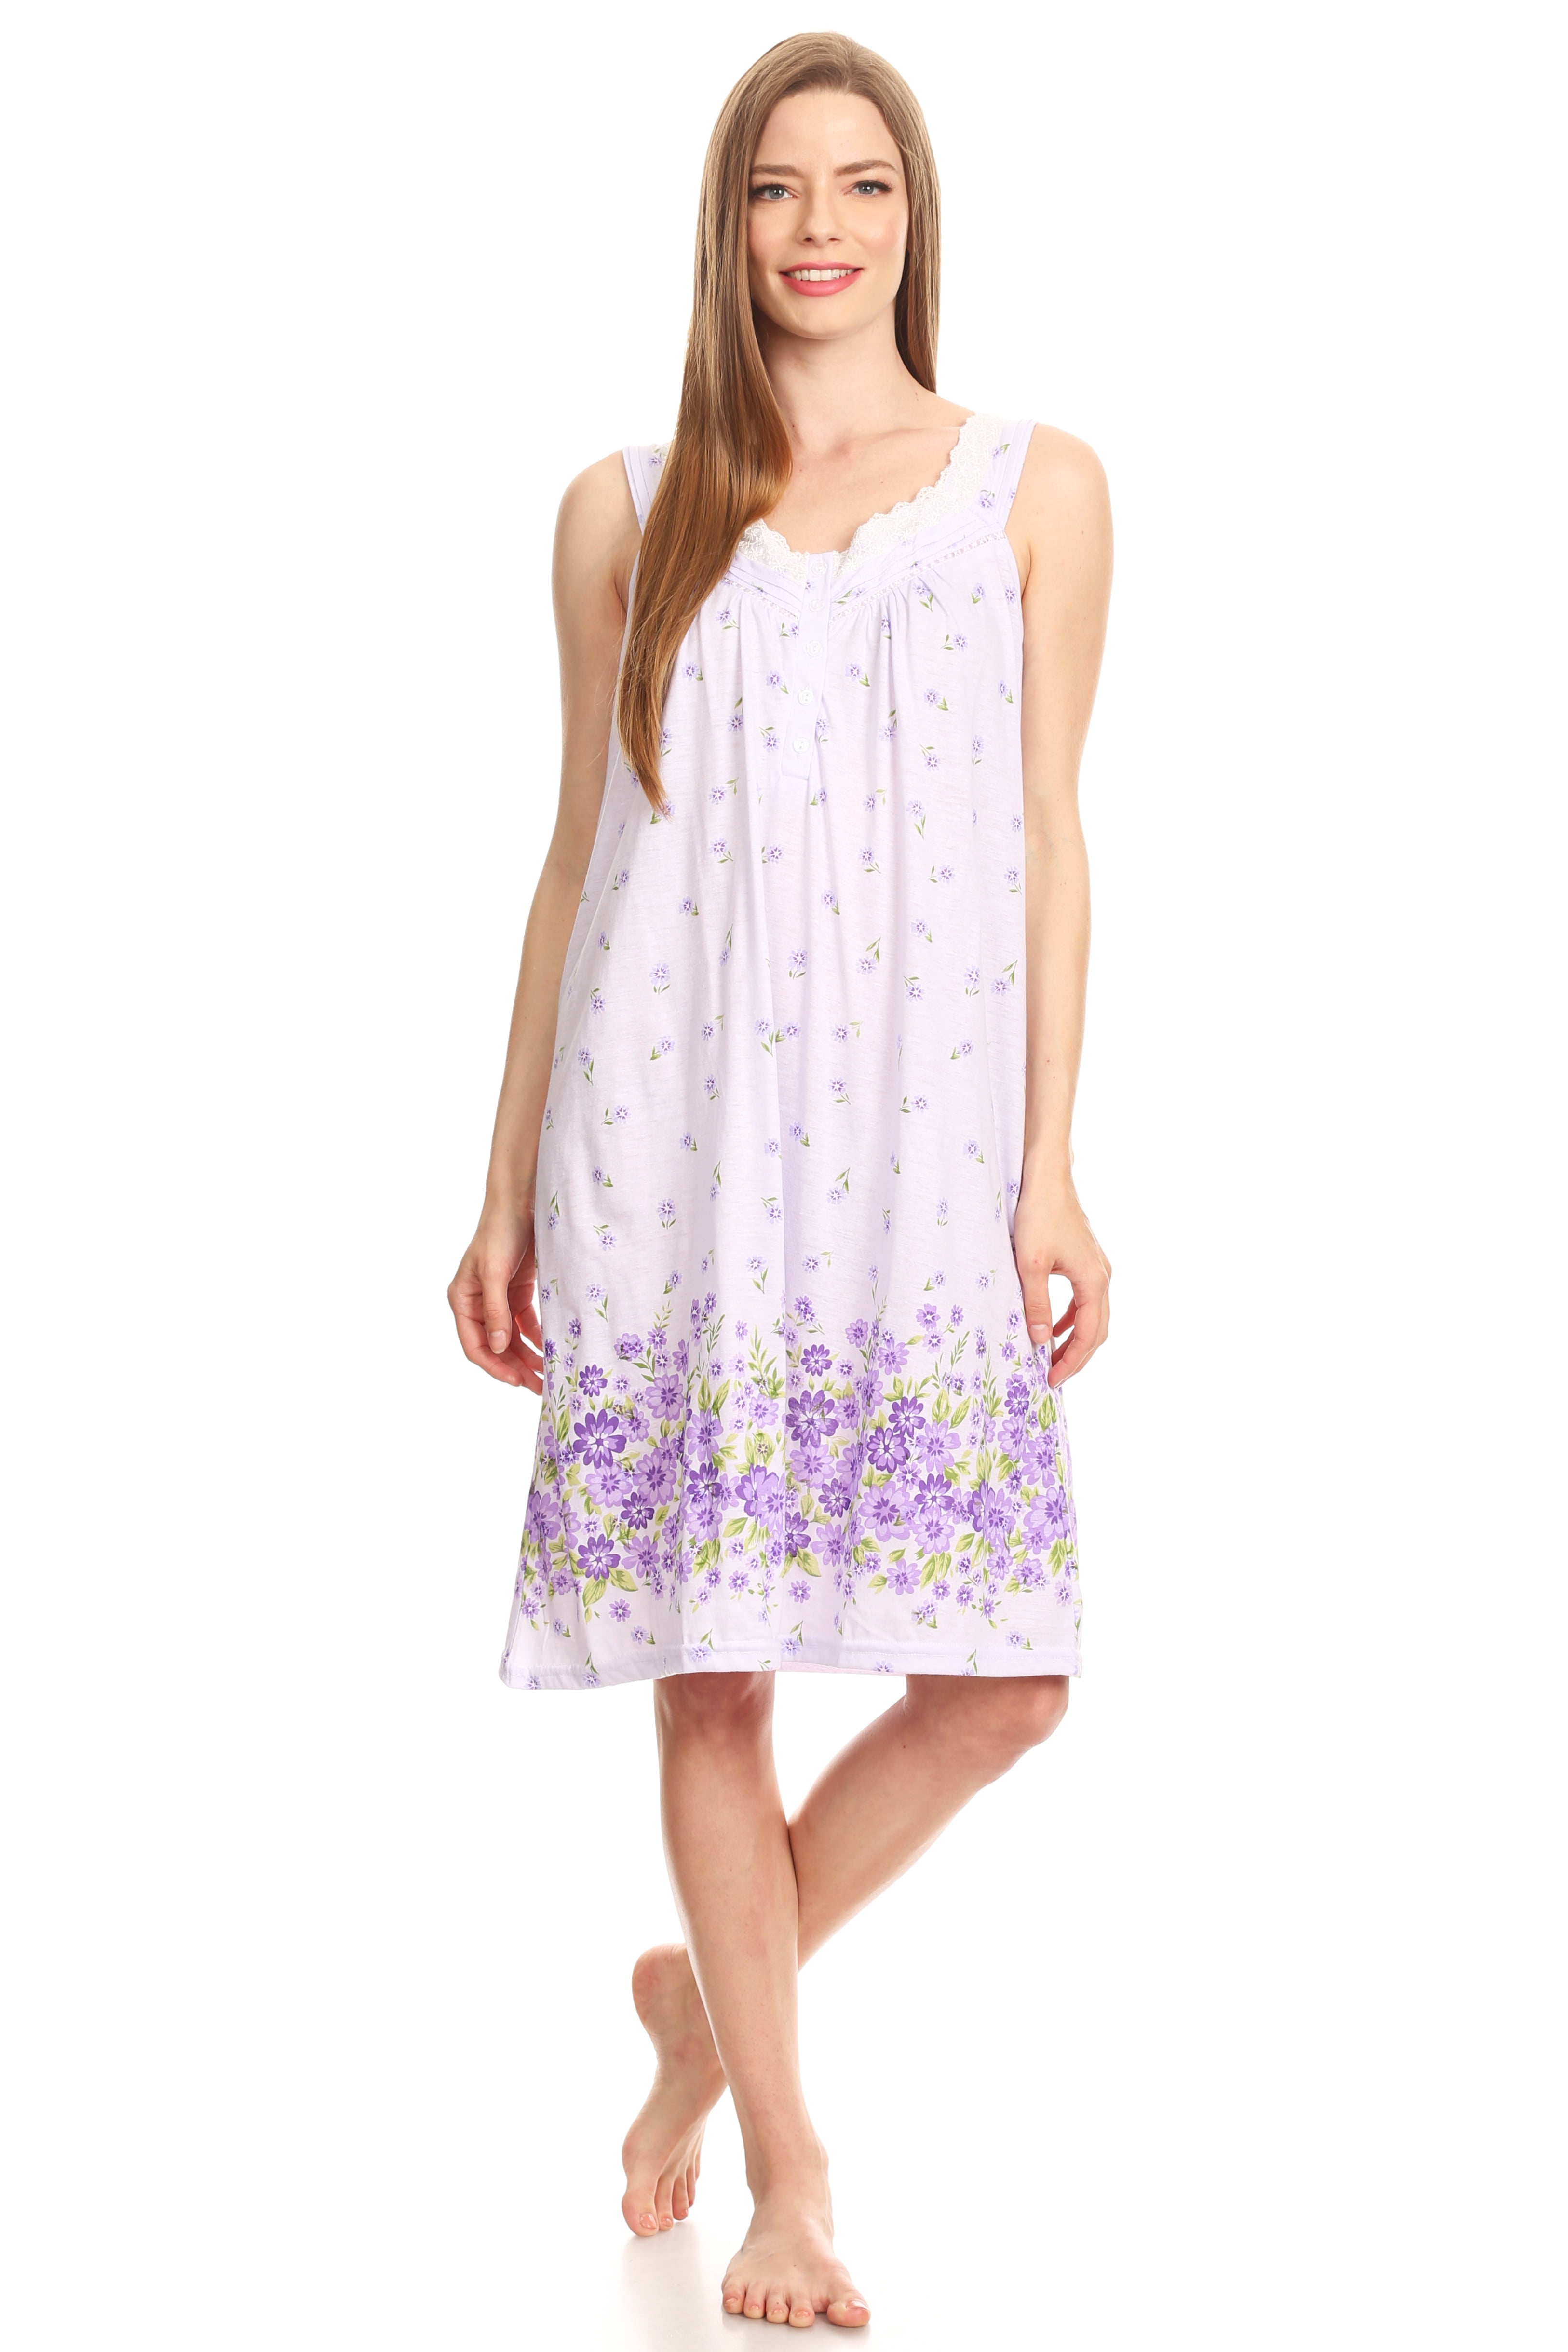 00125 Women Nightgown Sleepwear Pajamas Short Sleeve Sleep Dress Nightshirt Purple XXXL